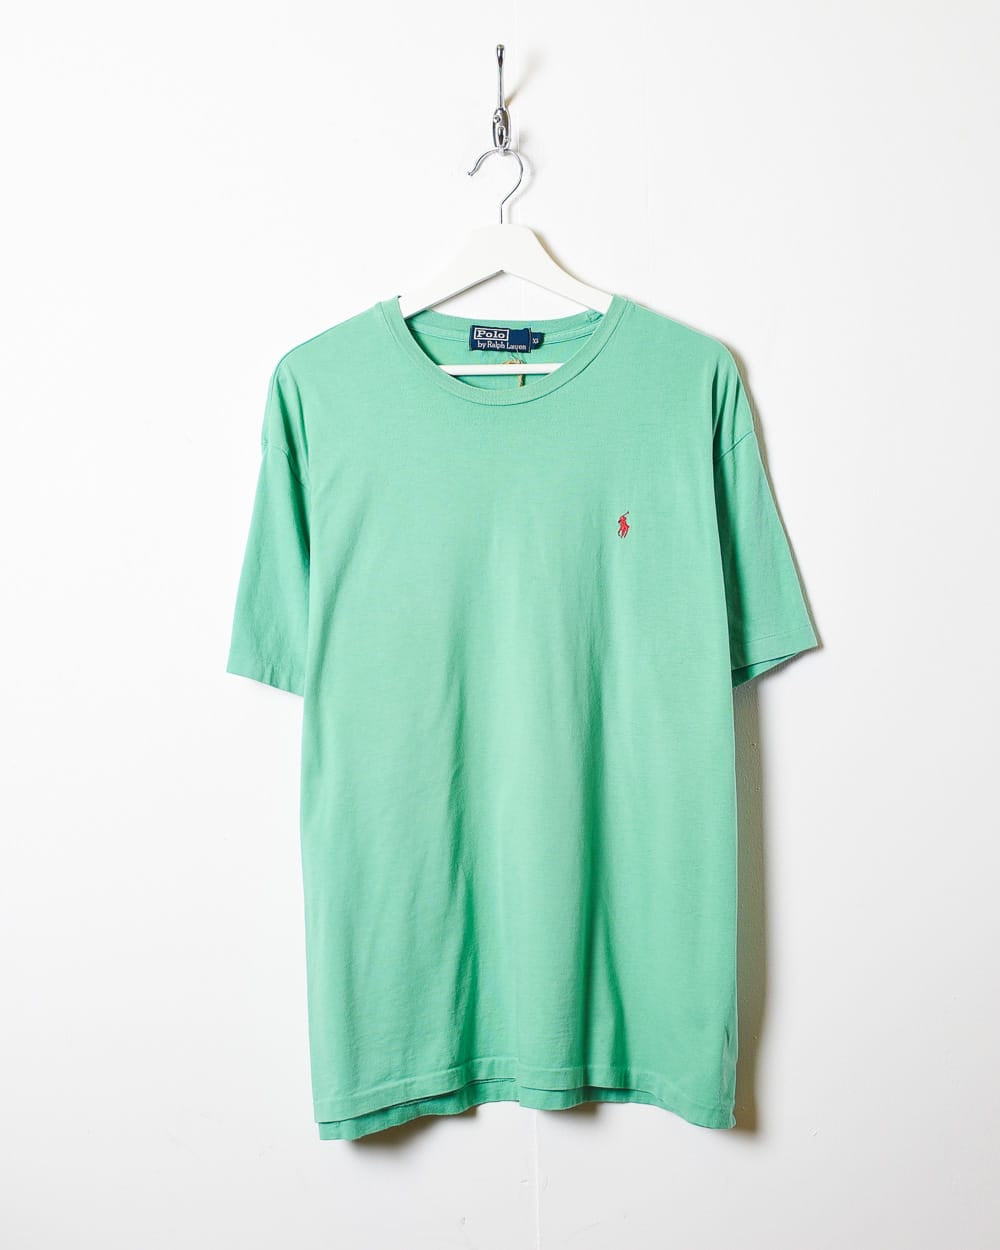 Vintage 90s Green Polo Ralph Lauren Single Stitch T-Shirt - X